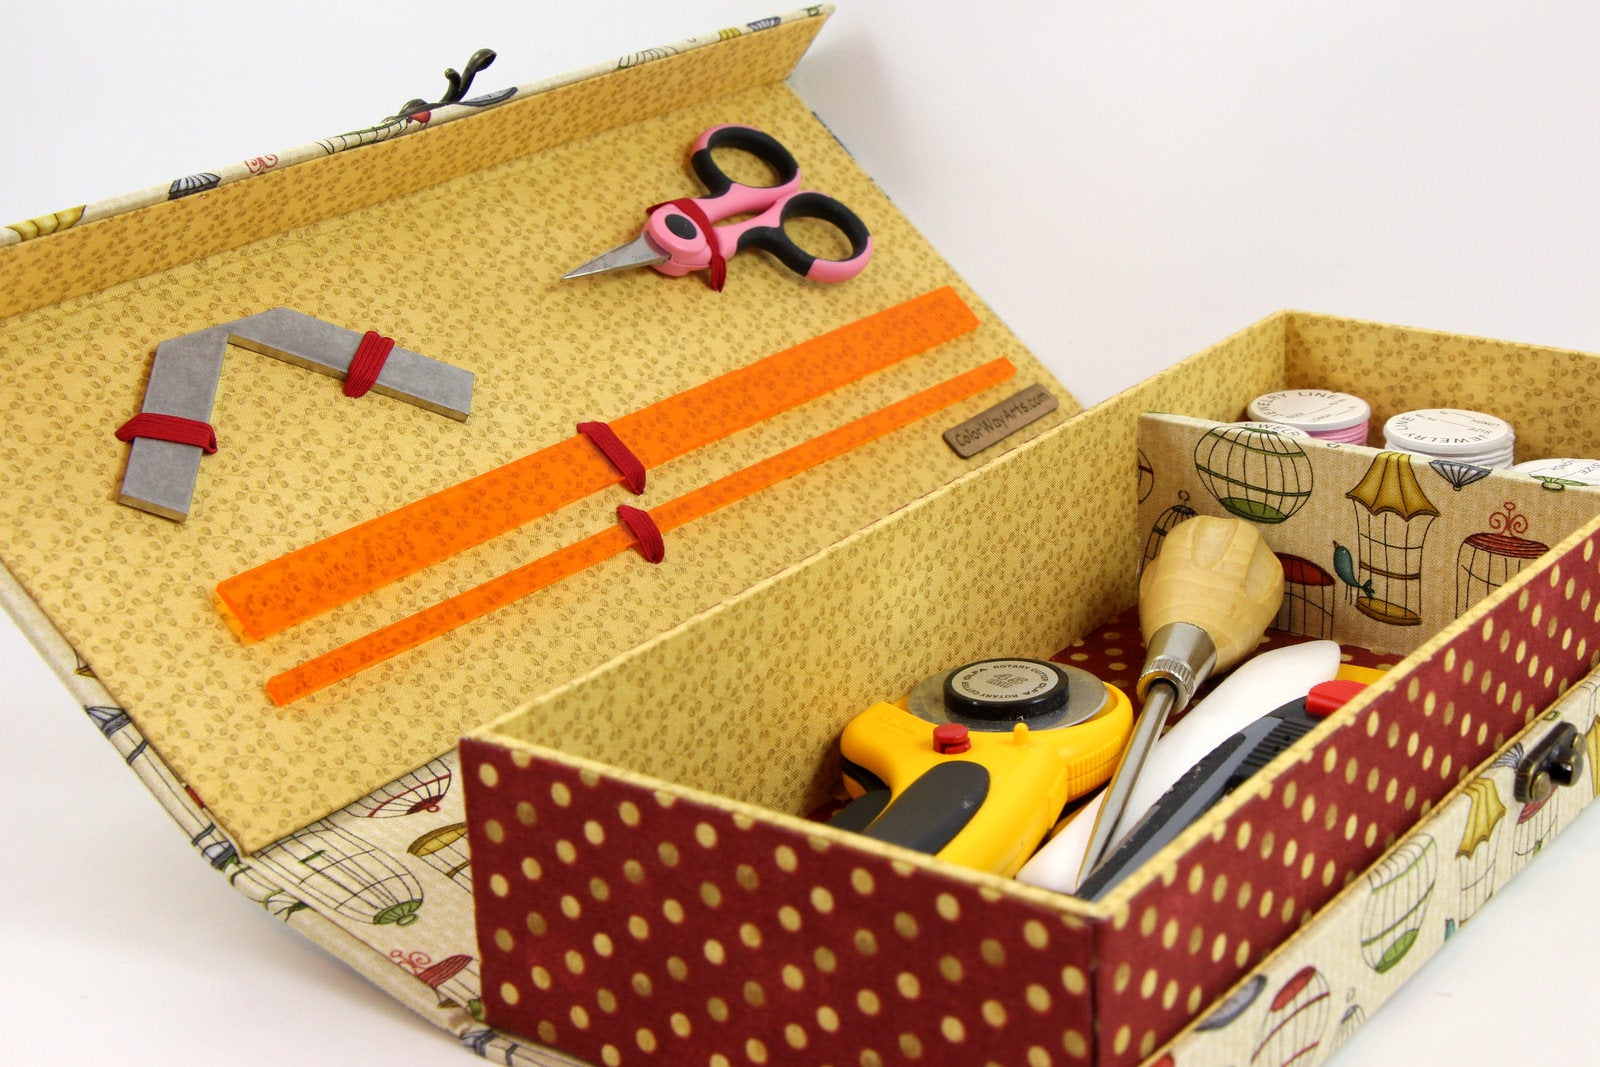 Fabric tool box DIY kit, cartonnage kit 138, online instructions inclu -  Colorway Arts